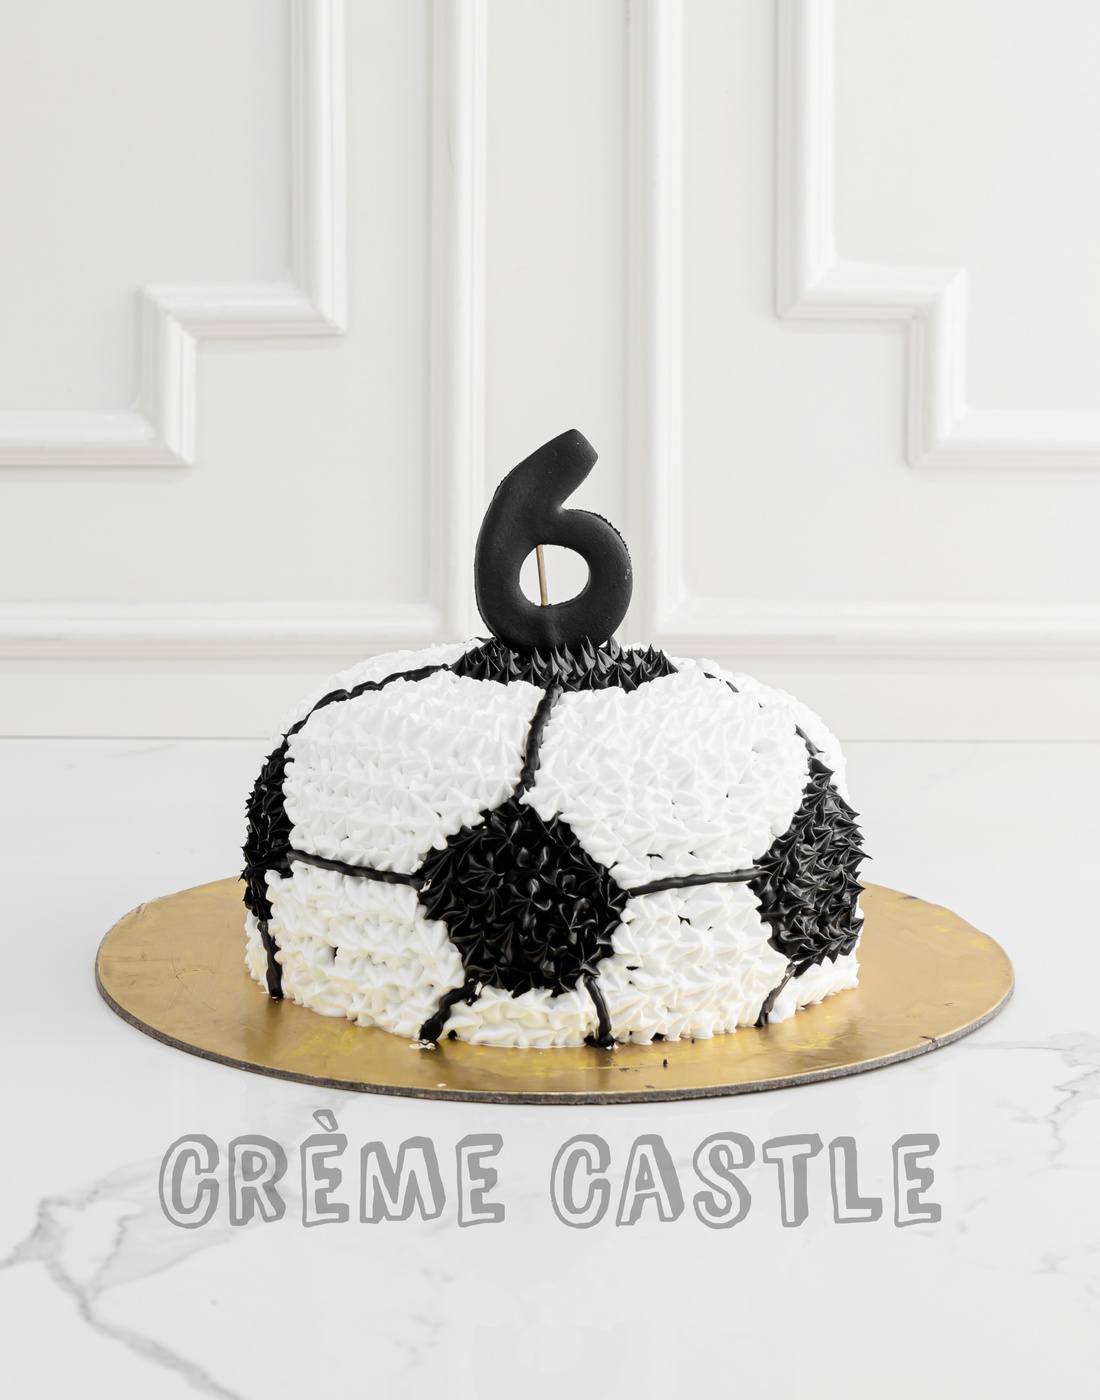 Football pitch cake | novelty cake for a boy's birthday. Sug… | Flickr